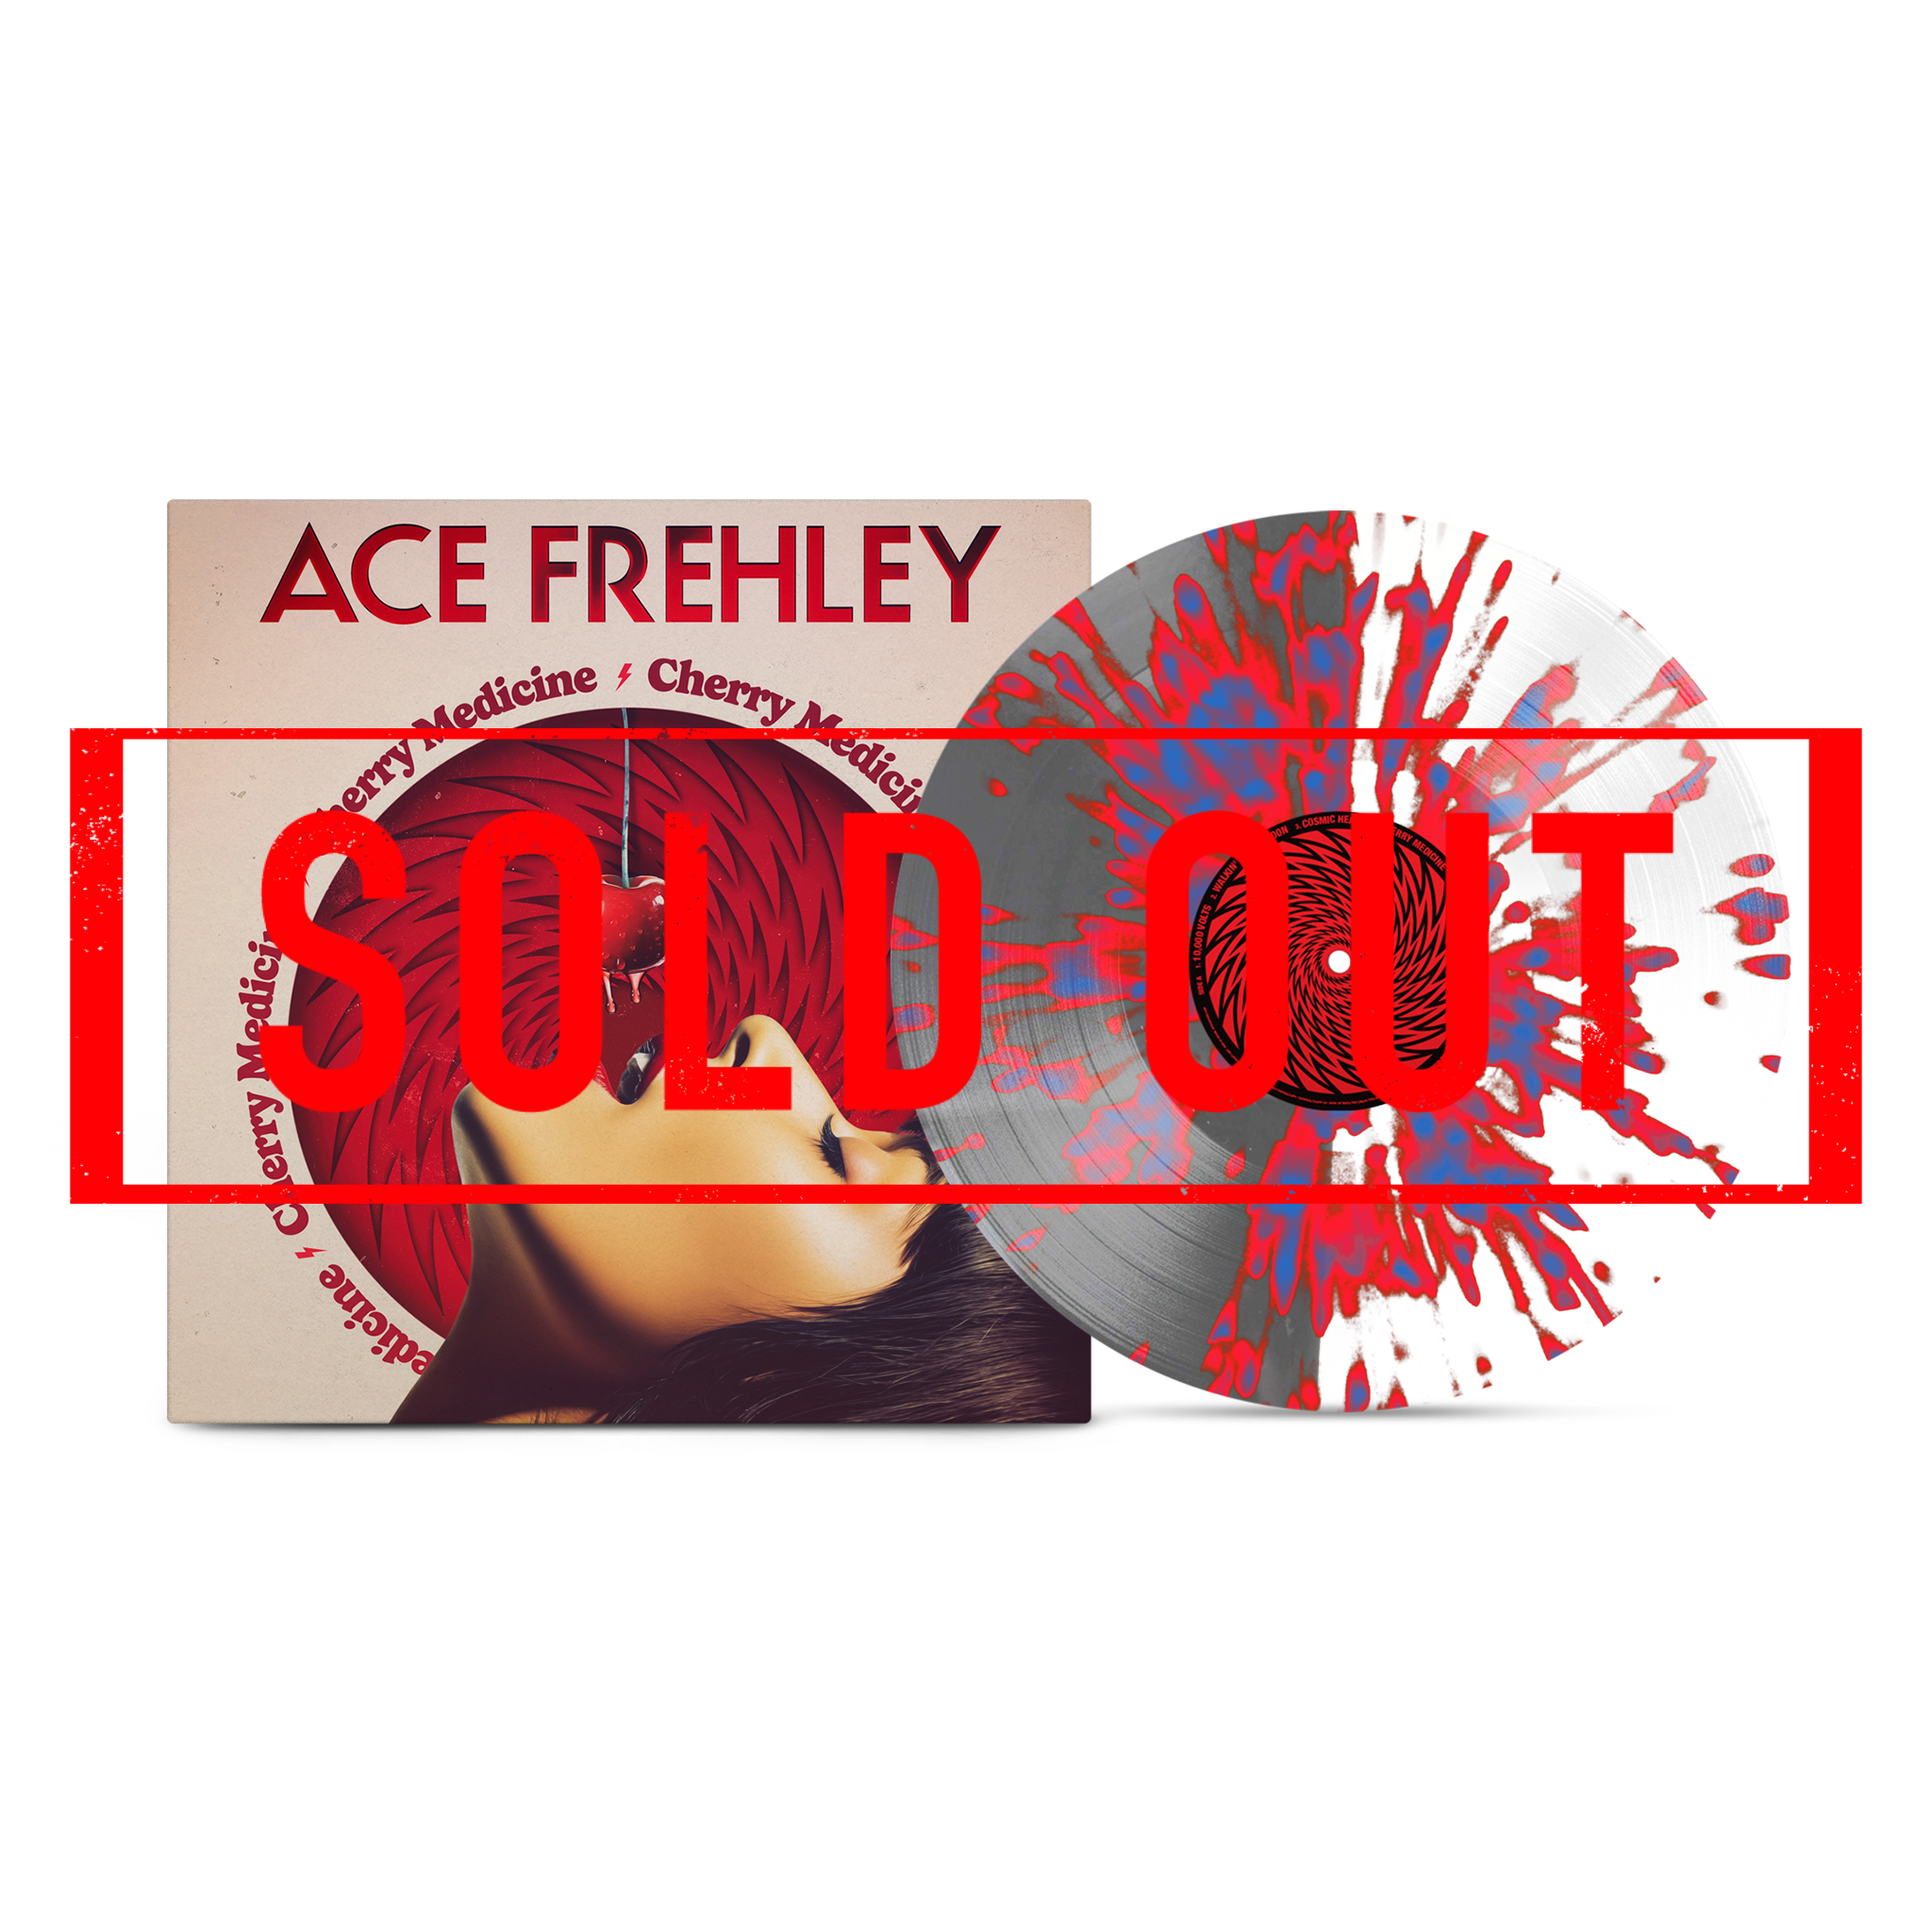 Ace Frehley – 10,000 Volts Half/Half with Splatter Alt-Cover Vinyl